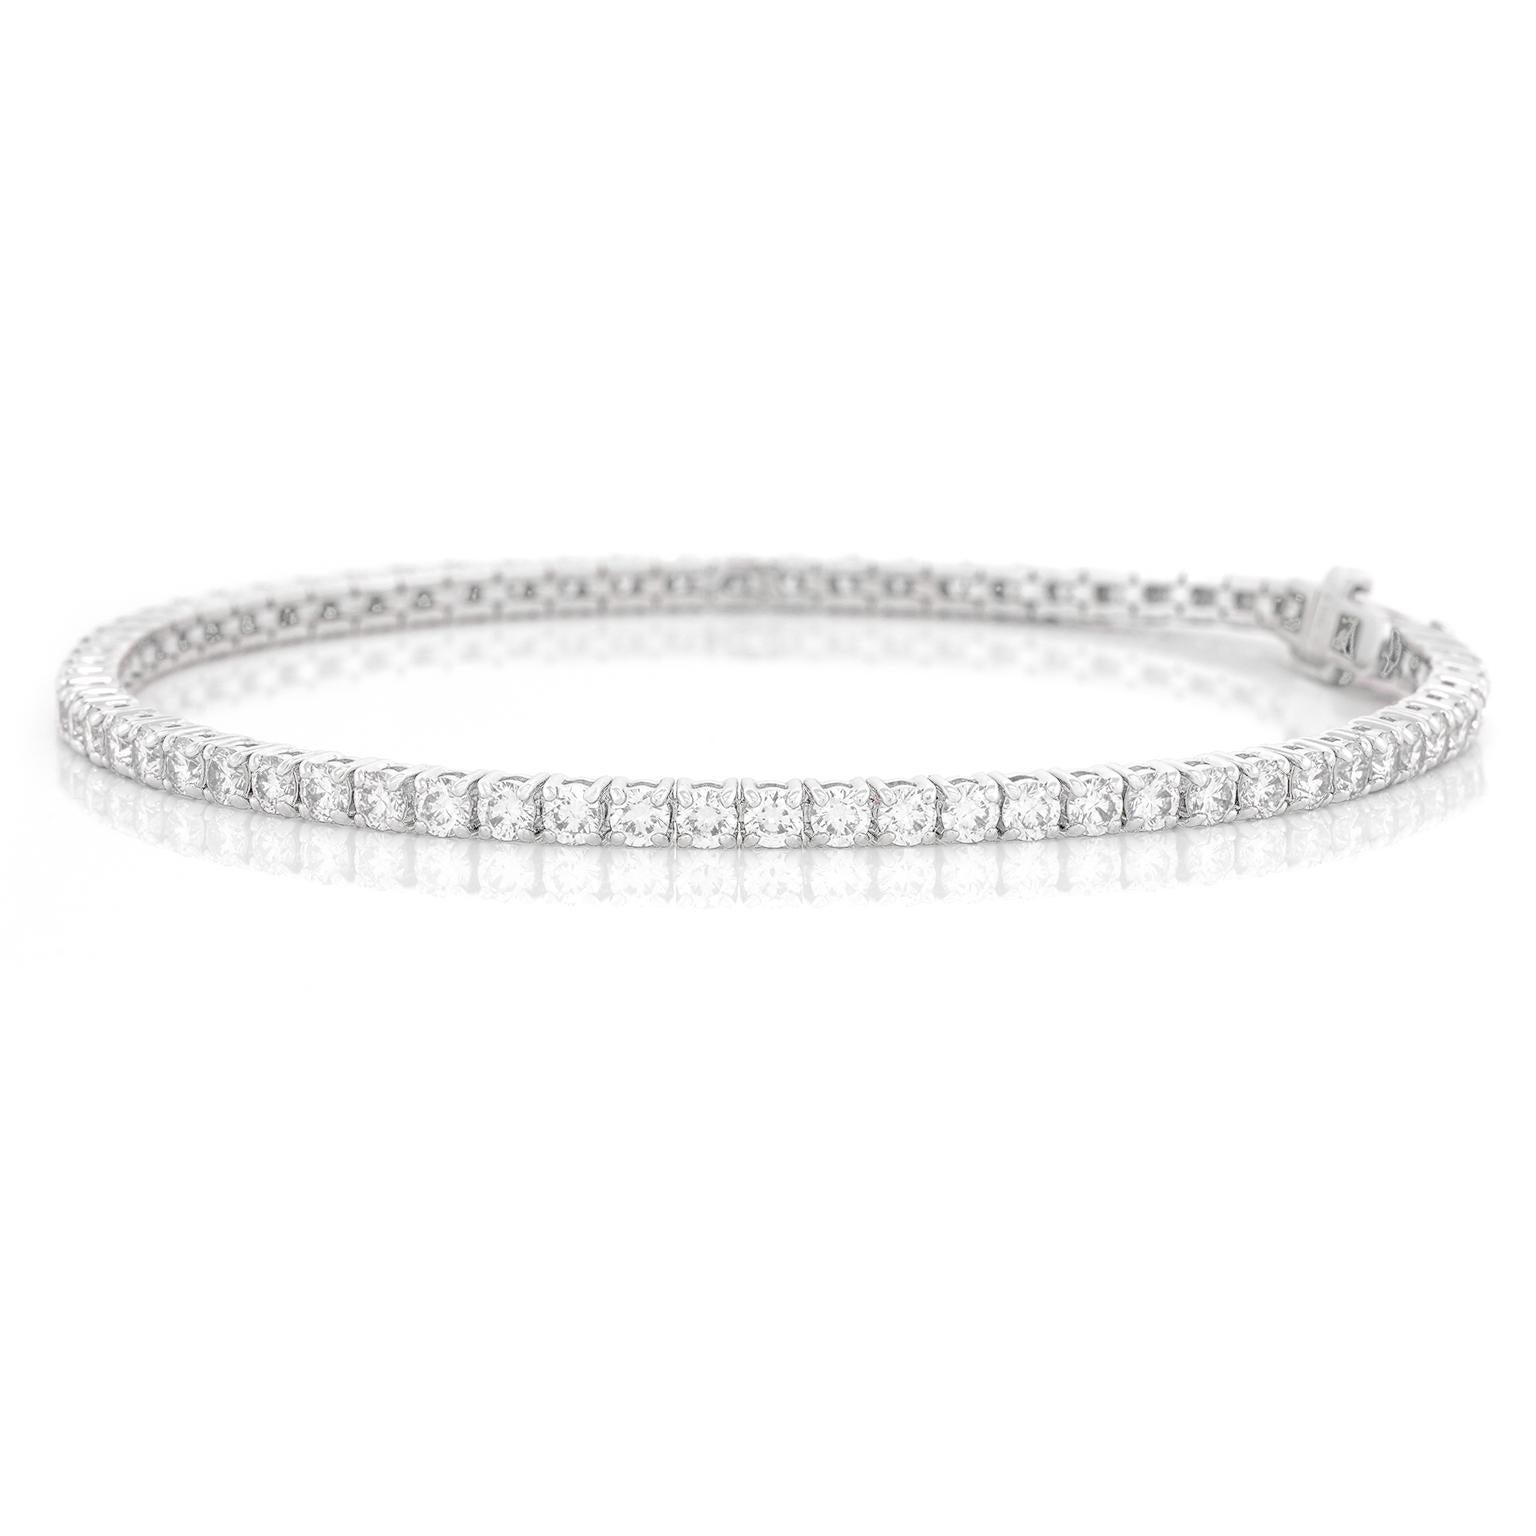 4.40 Carat Diamond Bracelet 8